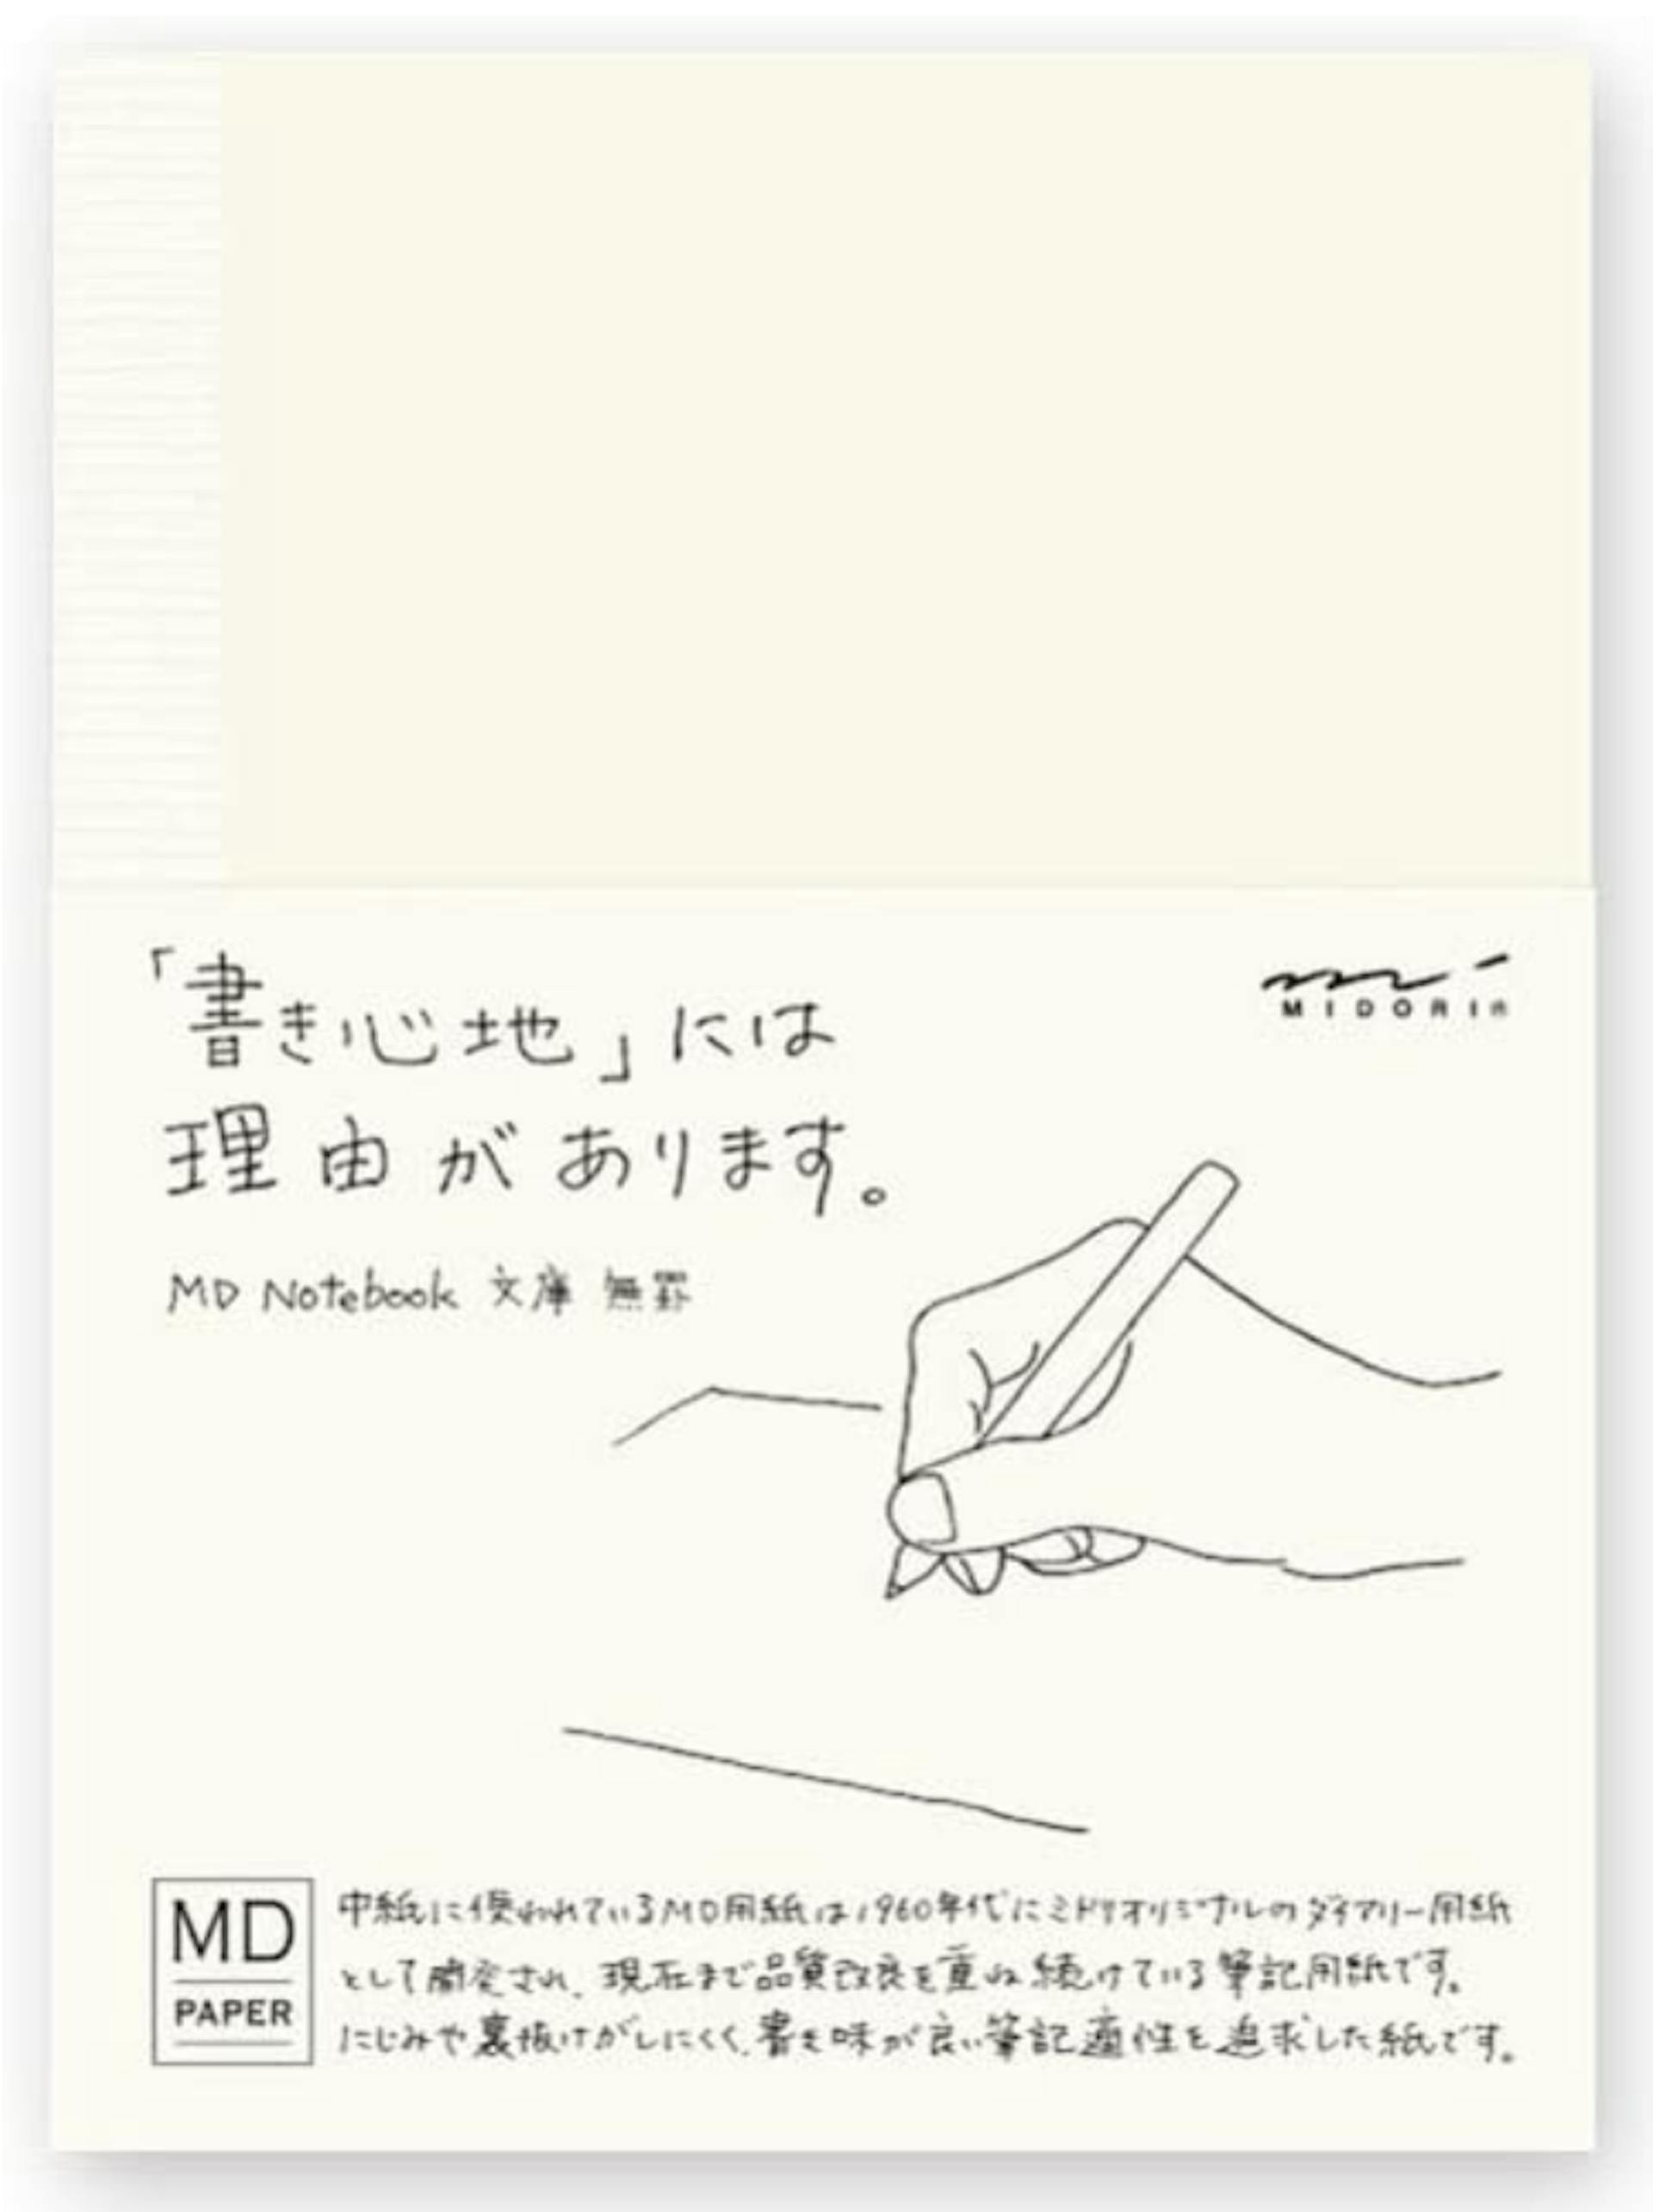 Midori notebook